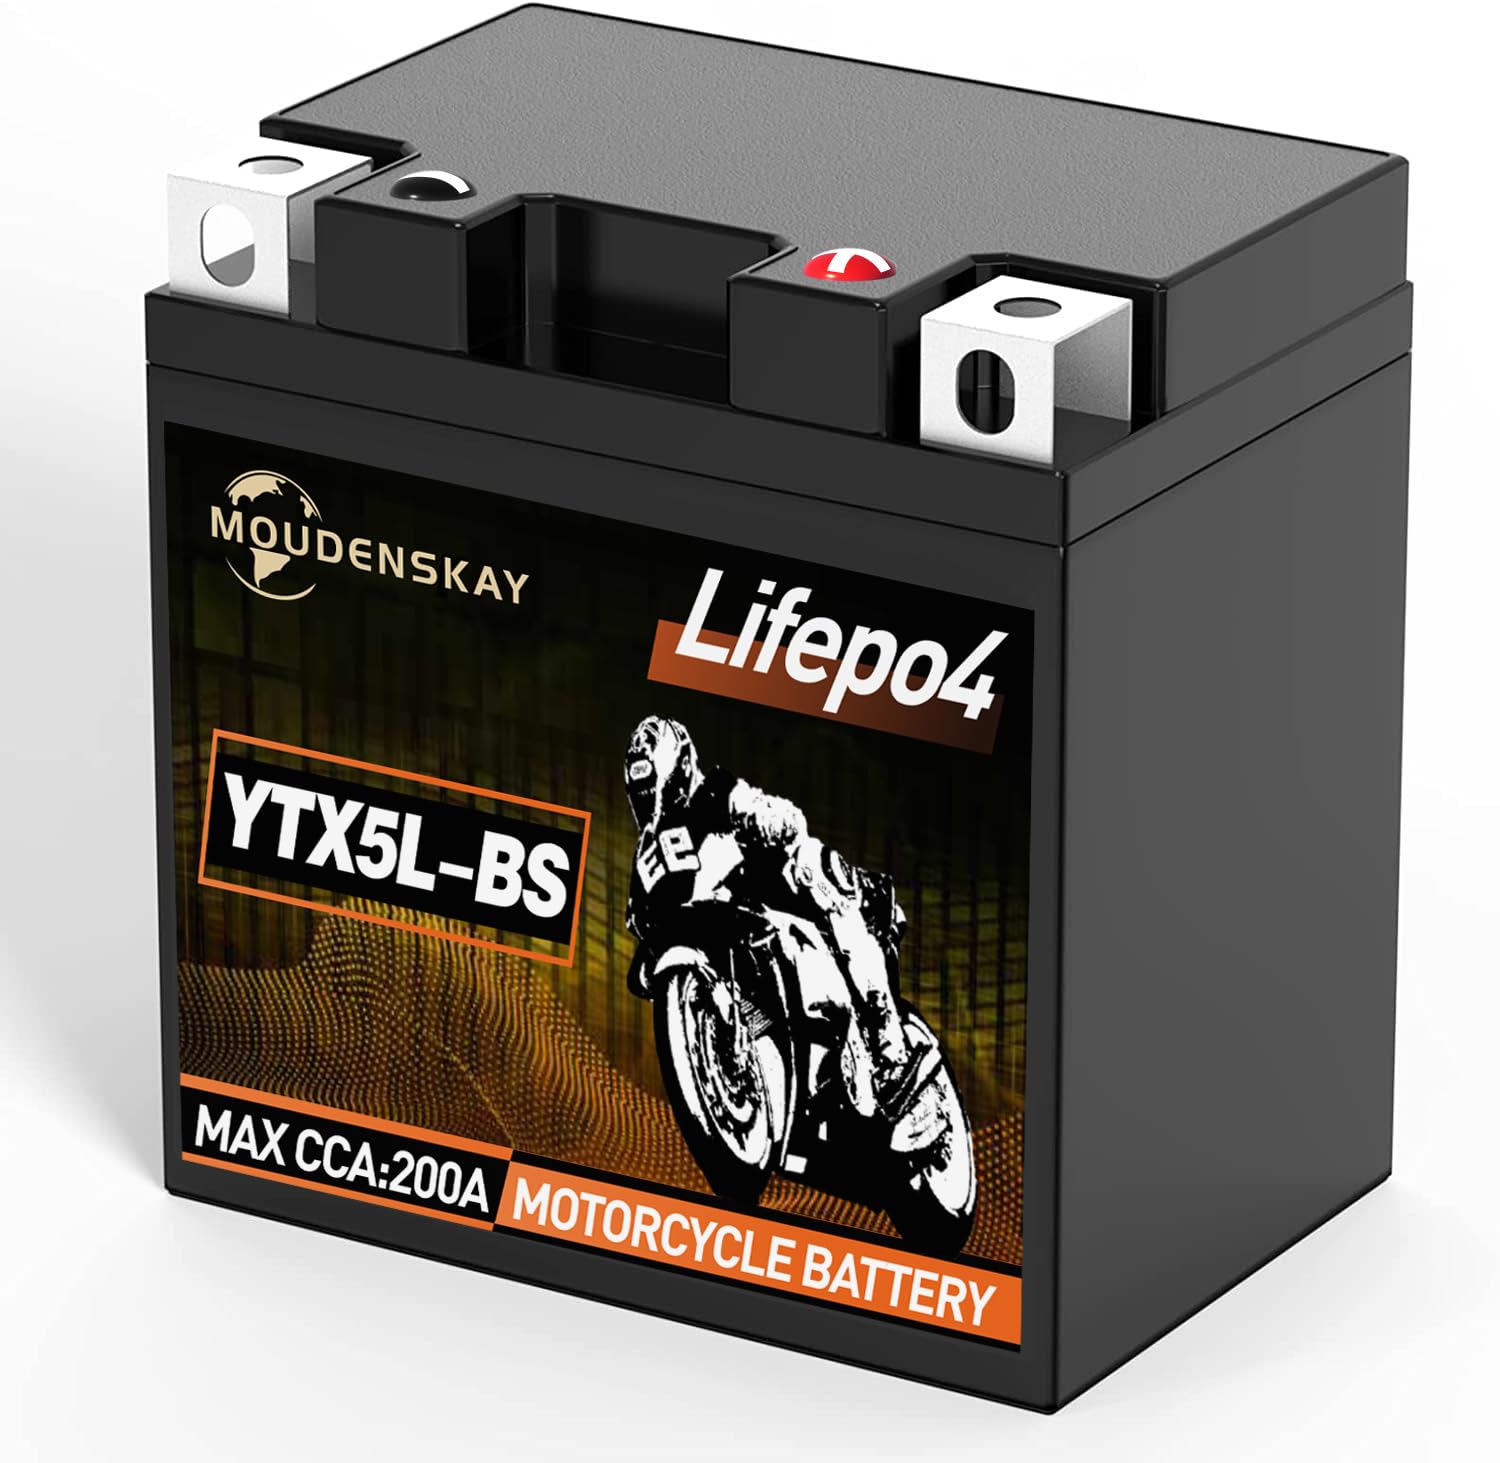 MOUDENSKAY Lithium Motorrad Batterie 12V Lithium Powersports Batterie mit BMS (YTX5L-BS 12.8V 2Ah 200CCA) LiFePO4 Motorrad Batterie Starterbatterien für Motorräder, ATV, UTV, Wasserfahrzeuge, etc von MOUDENSKAY